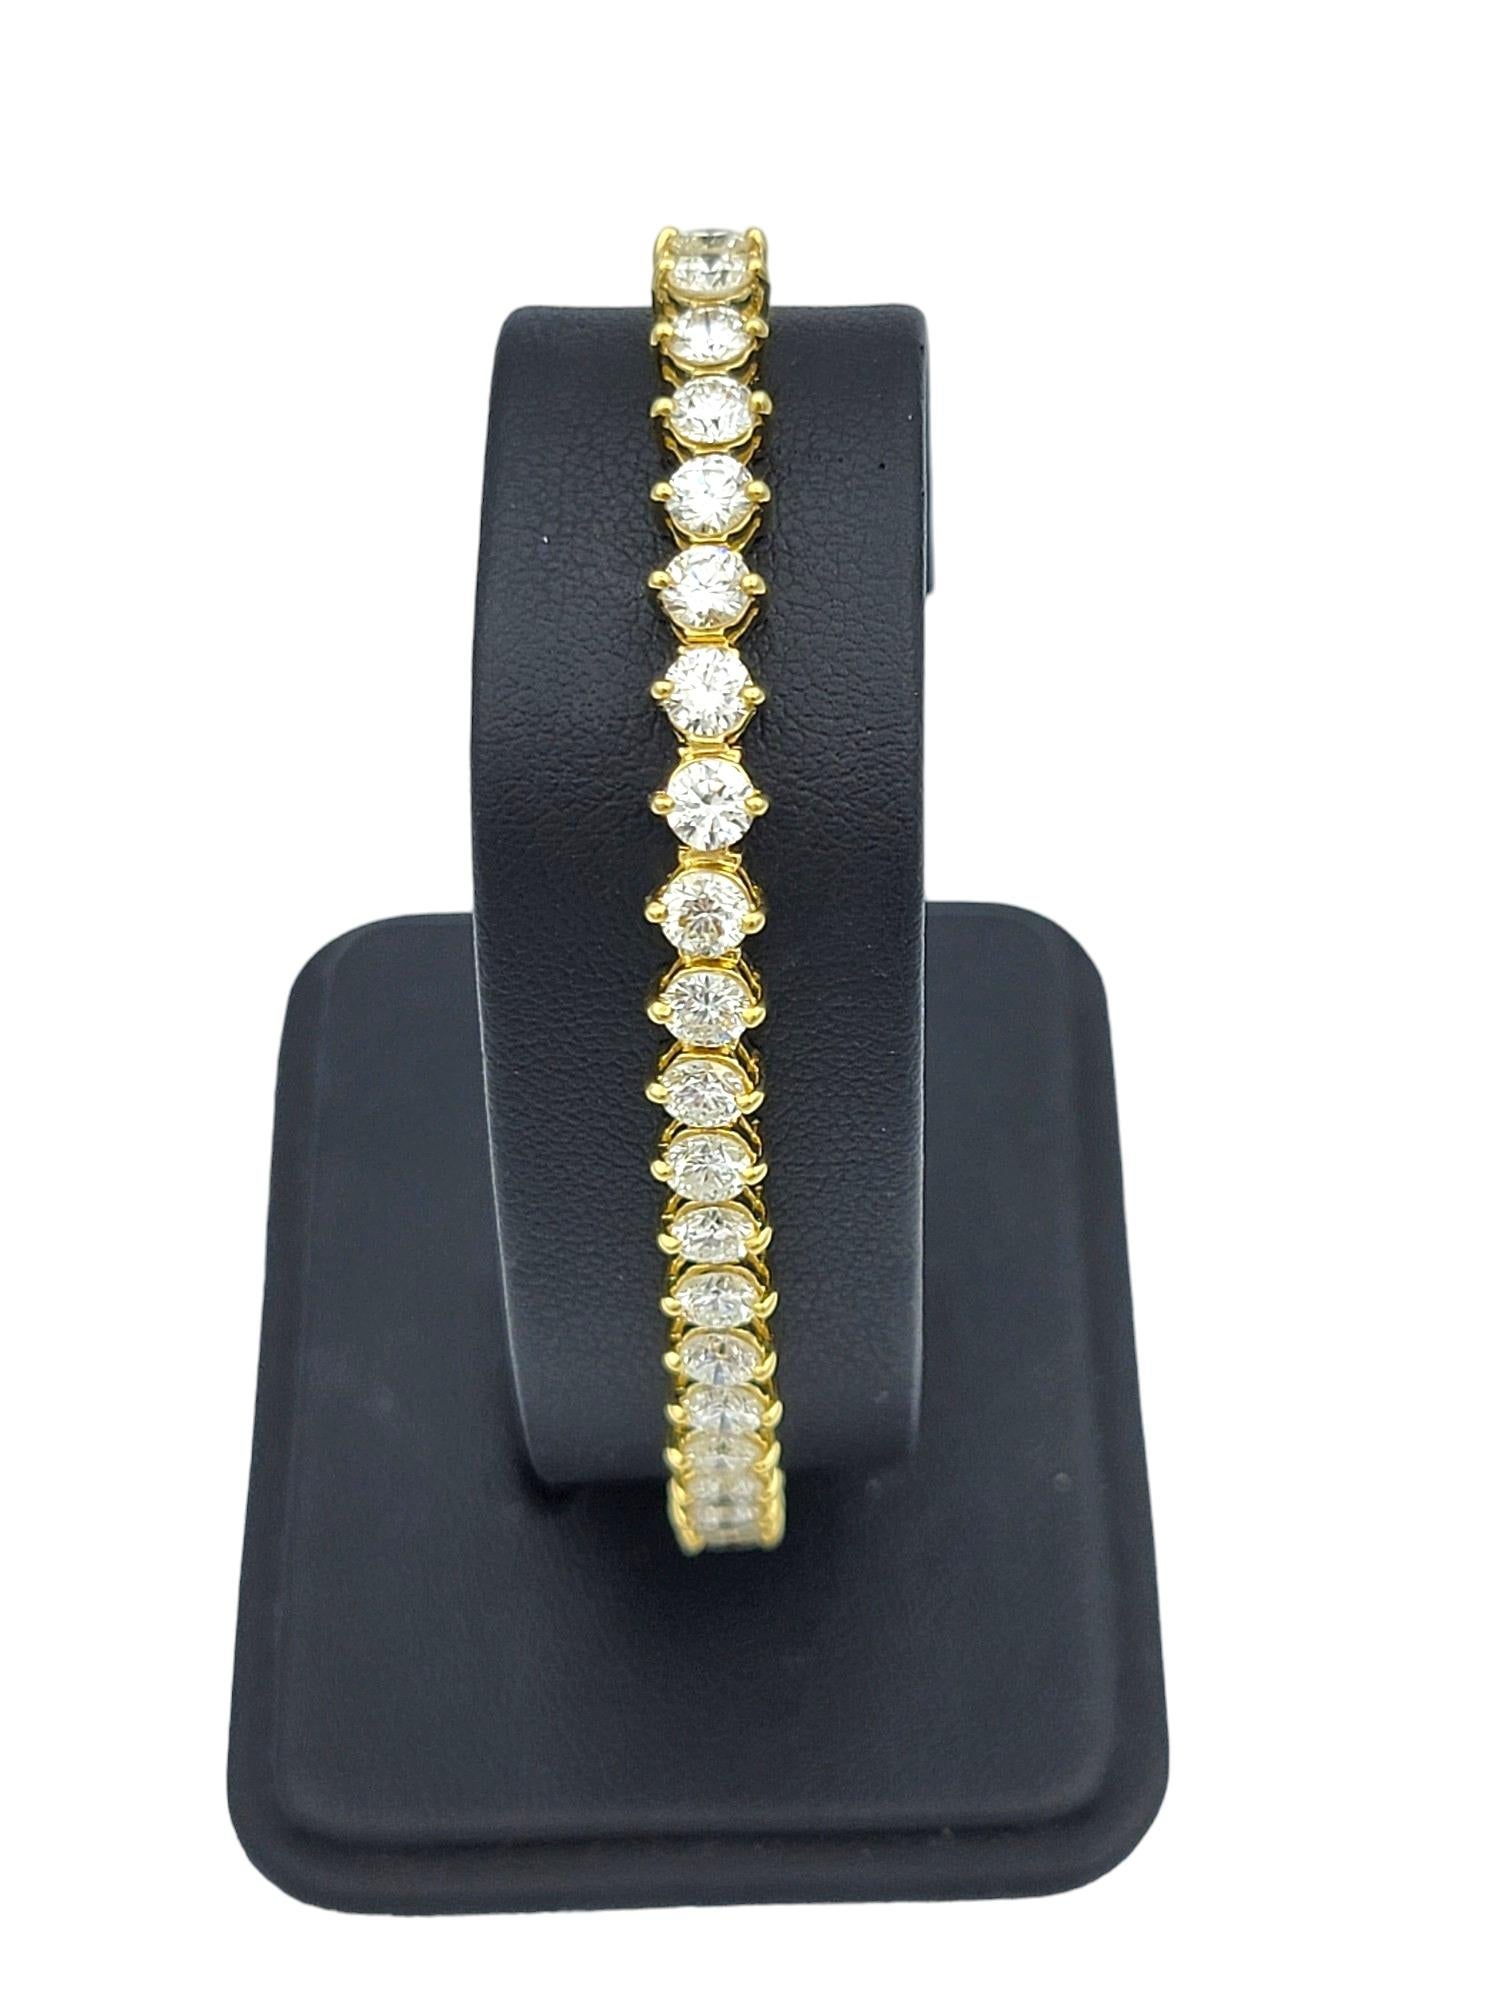 7.66 Carat Total Round Diamond Tennis Bracelet Set in 18 Karat Yellow Gold For Sale 6